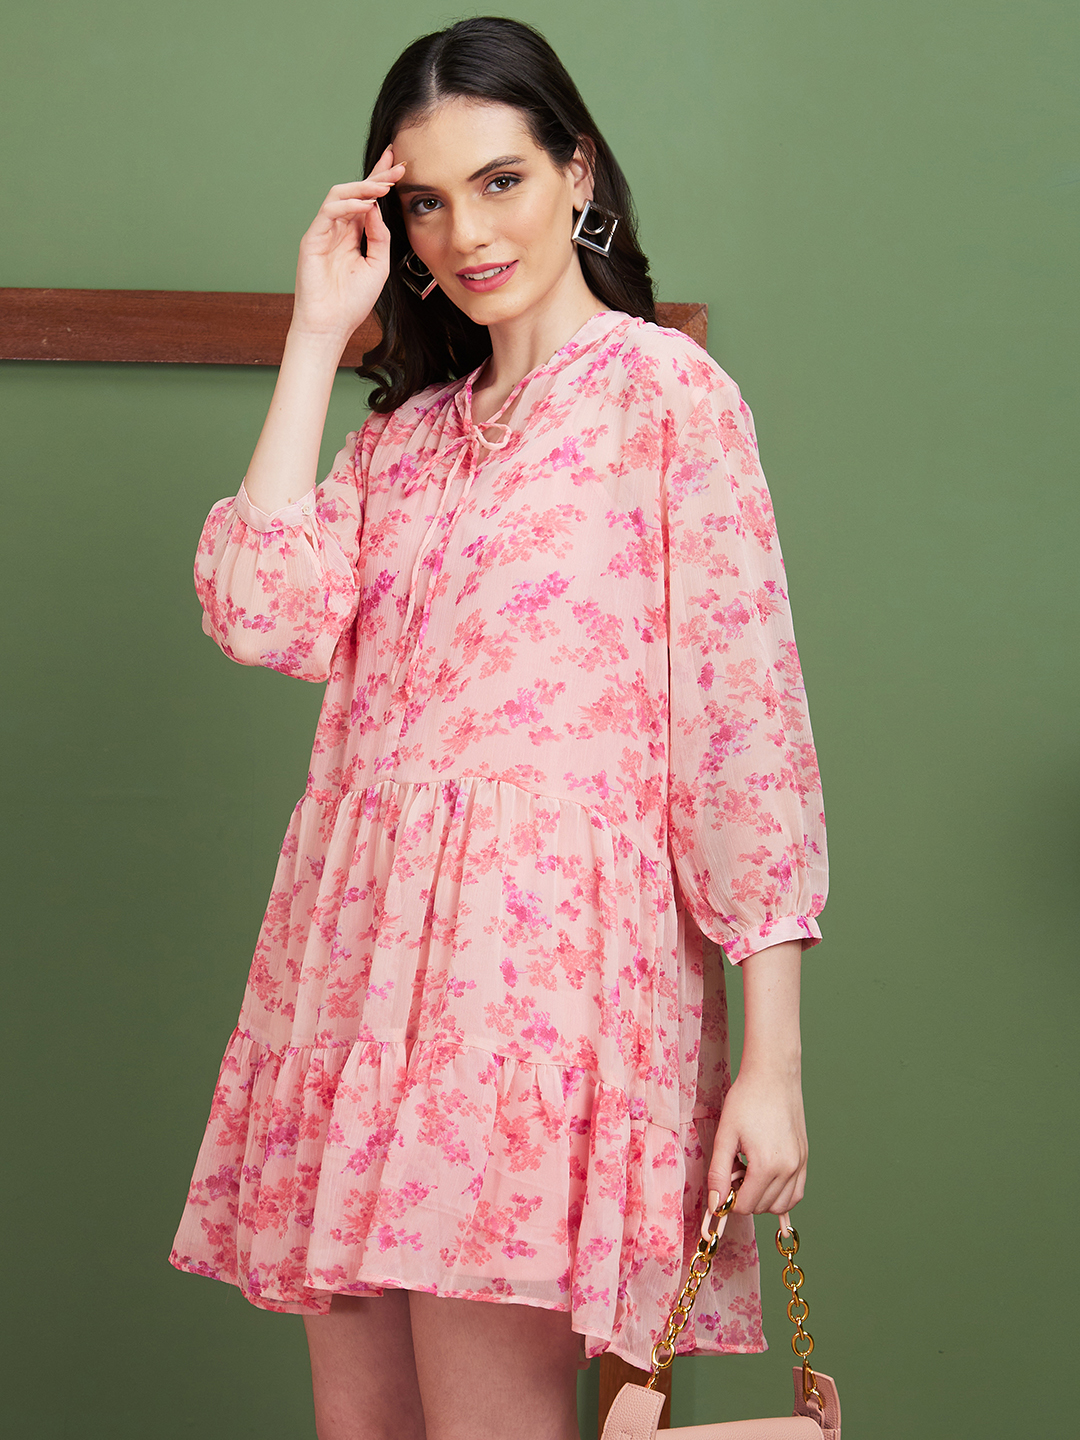 Globus Women Pink Floral Print Polyester Mandarin Collar A-Line Casual Dress